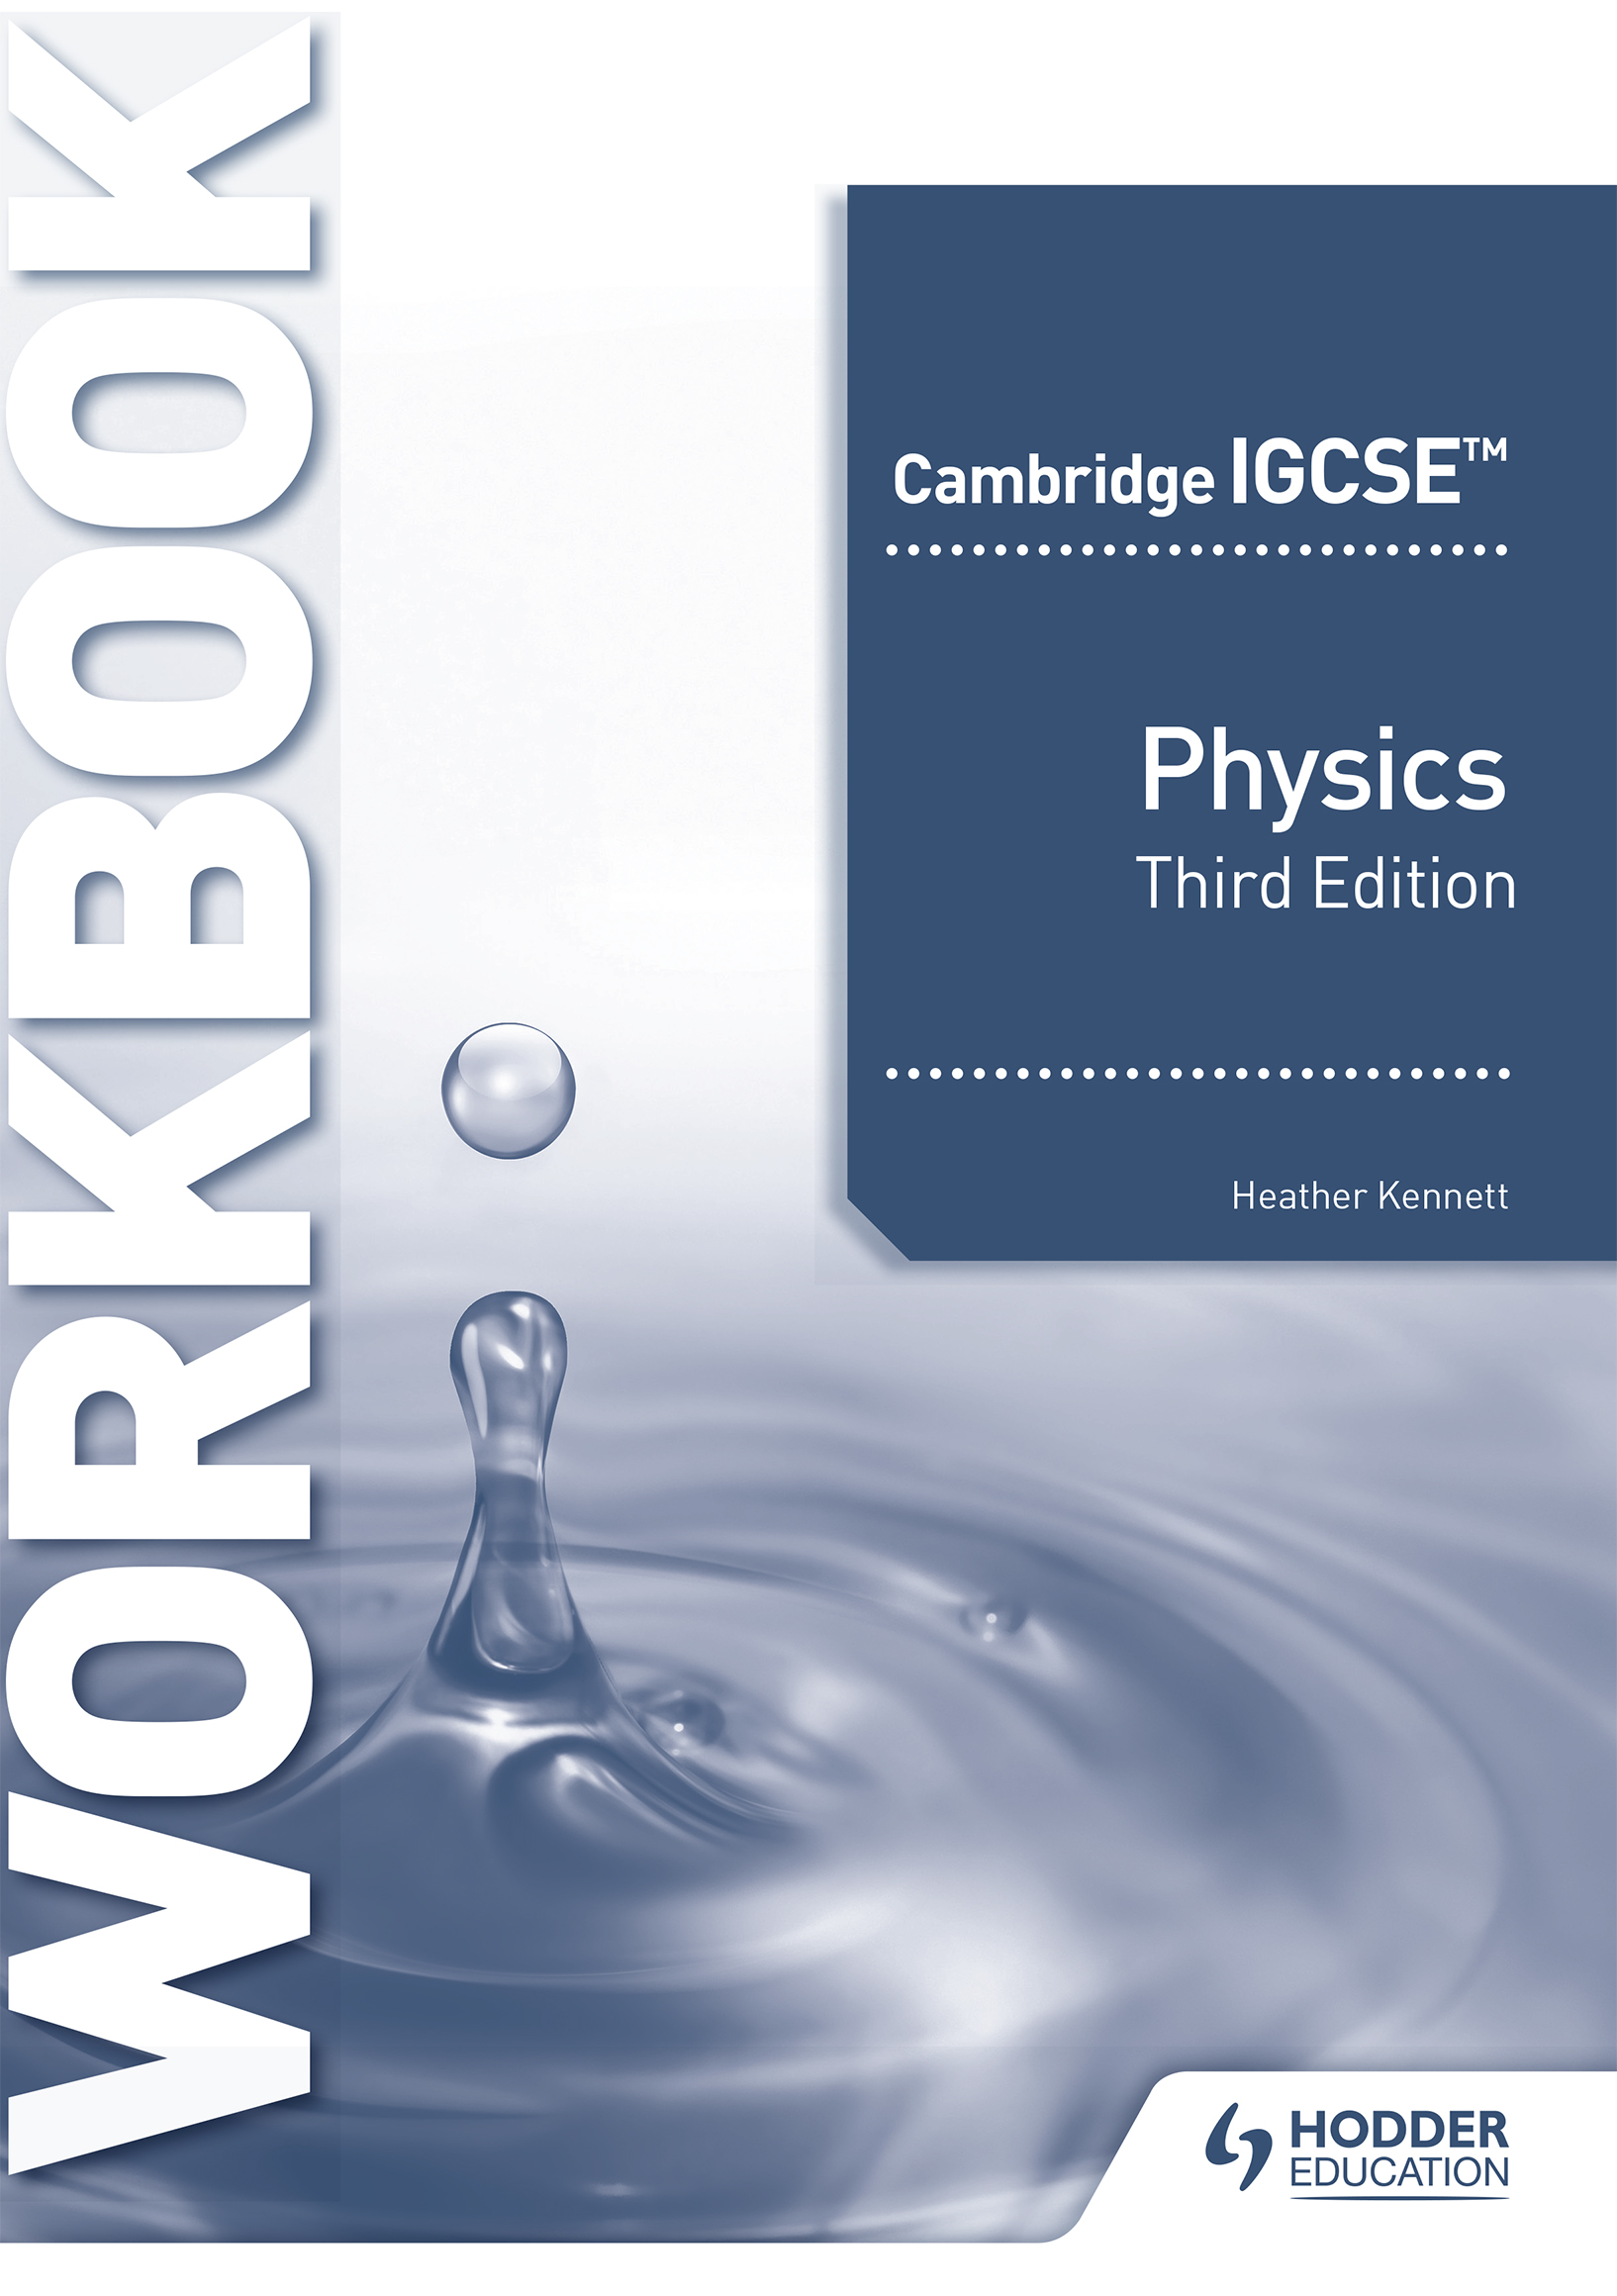 Cambridge Igcse Physics Workbook Third Edition Answers Pdf Gracieatmcconnell 0523